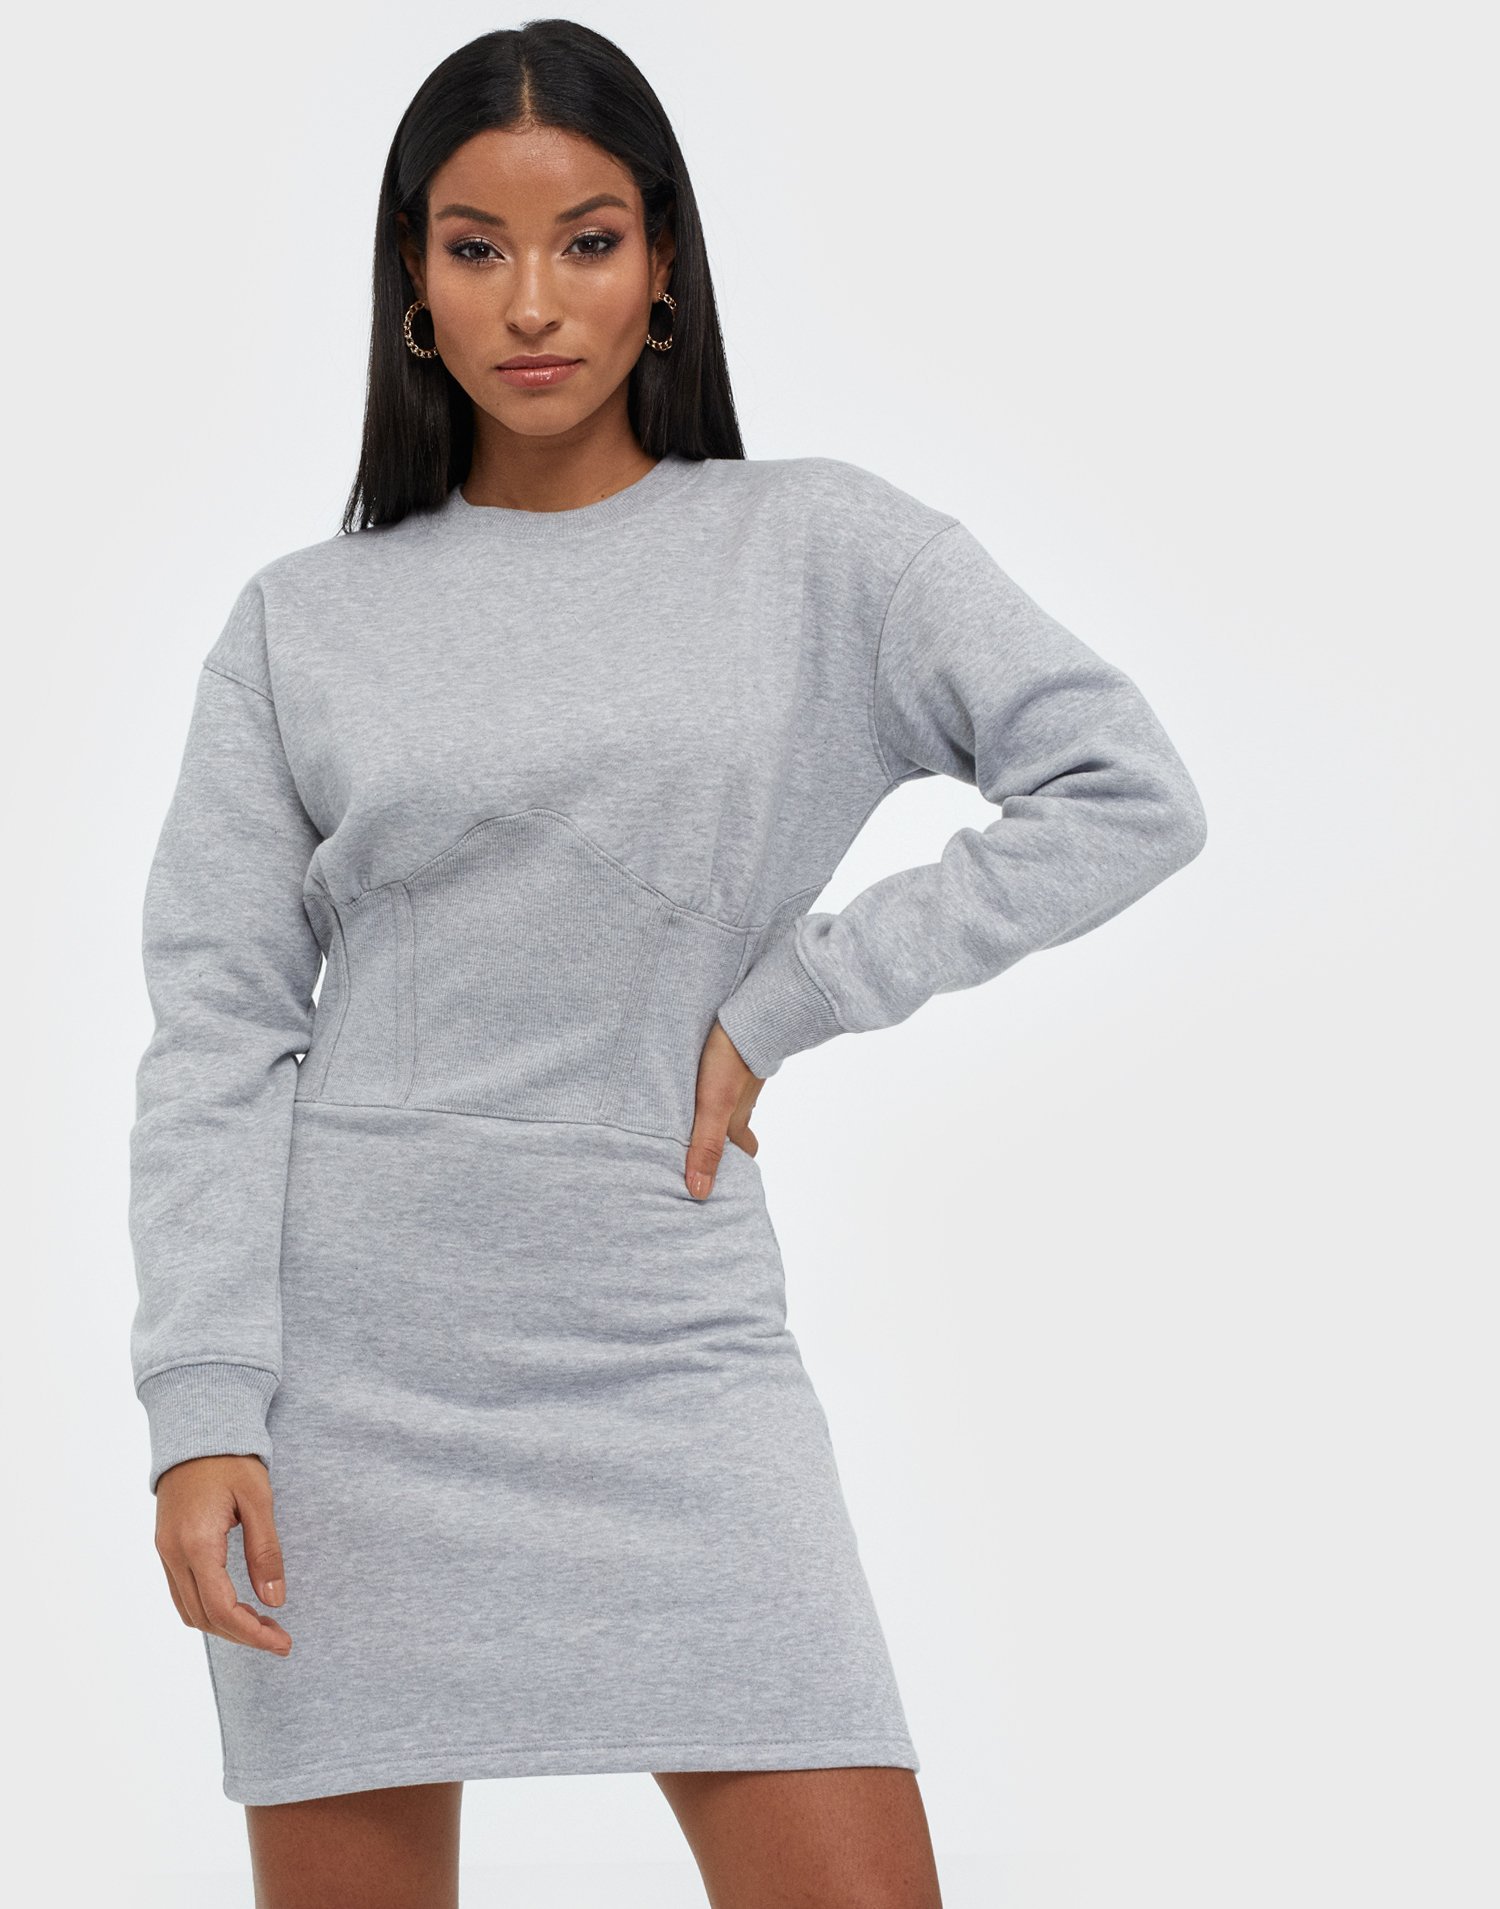 grey corset sweater dress